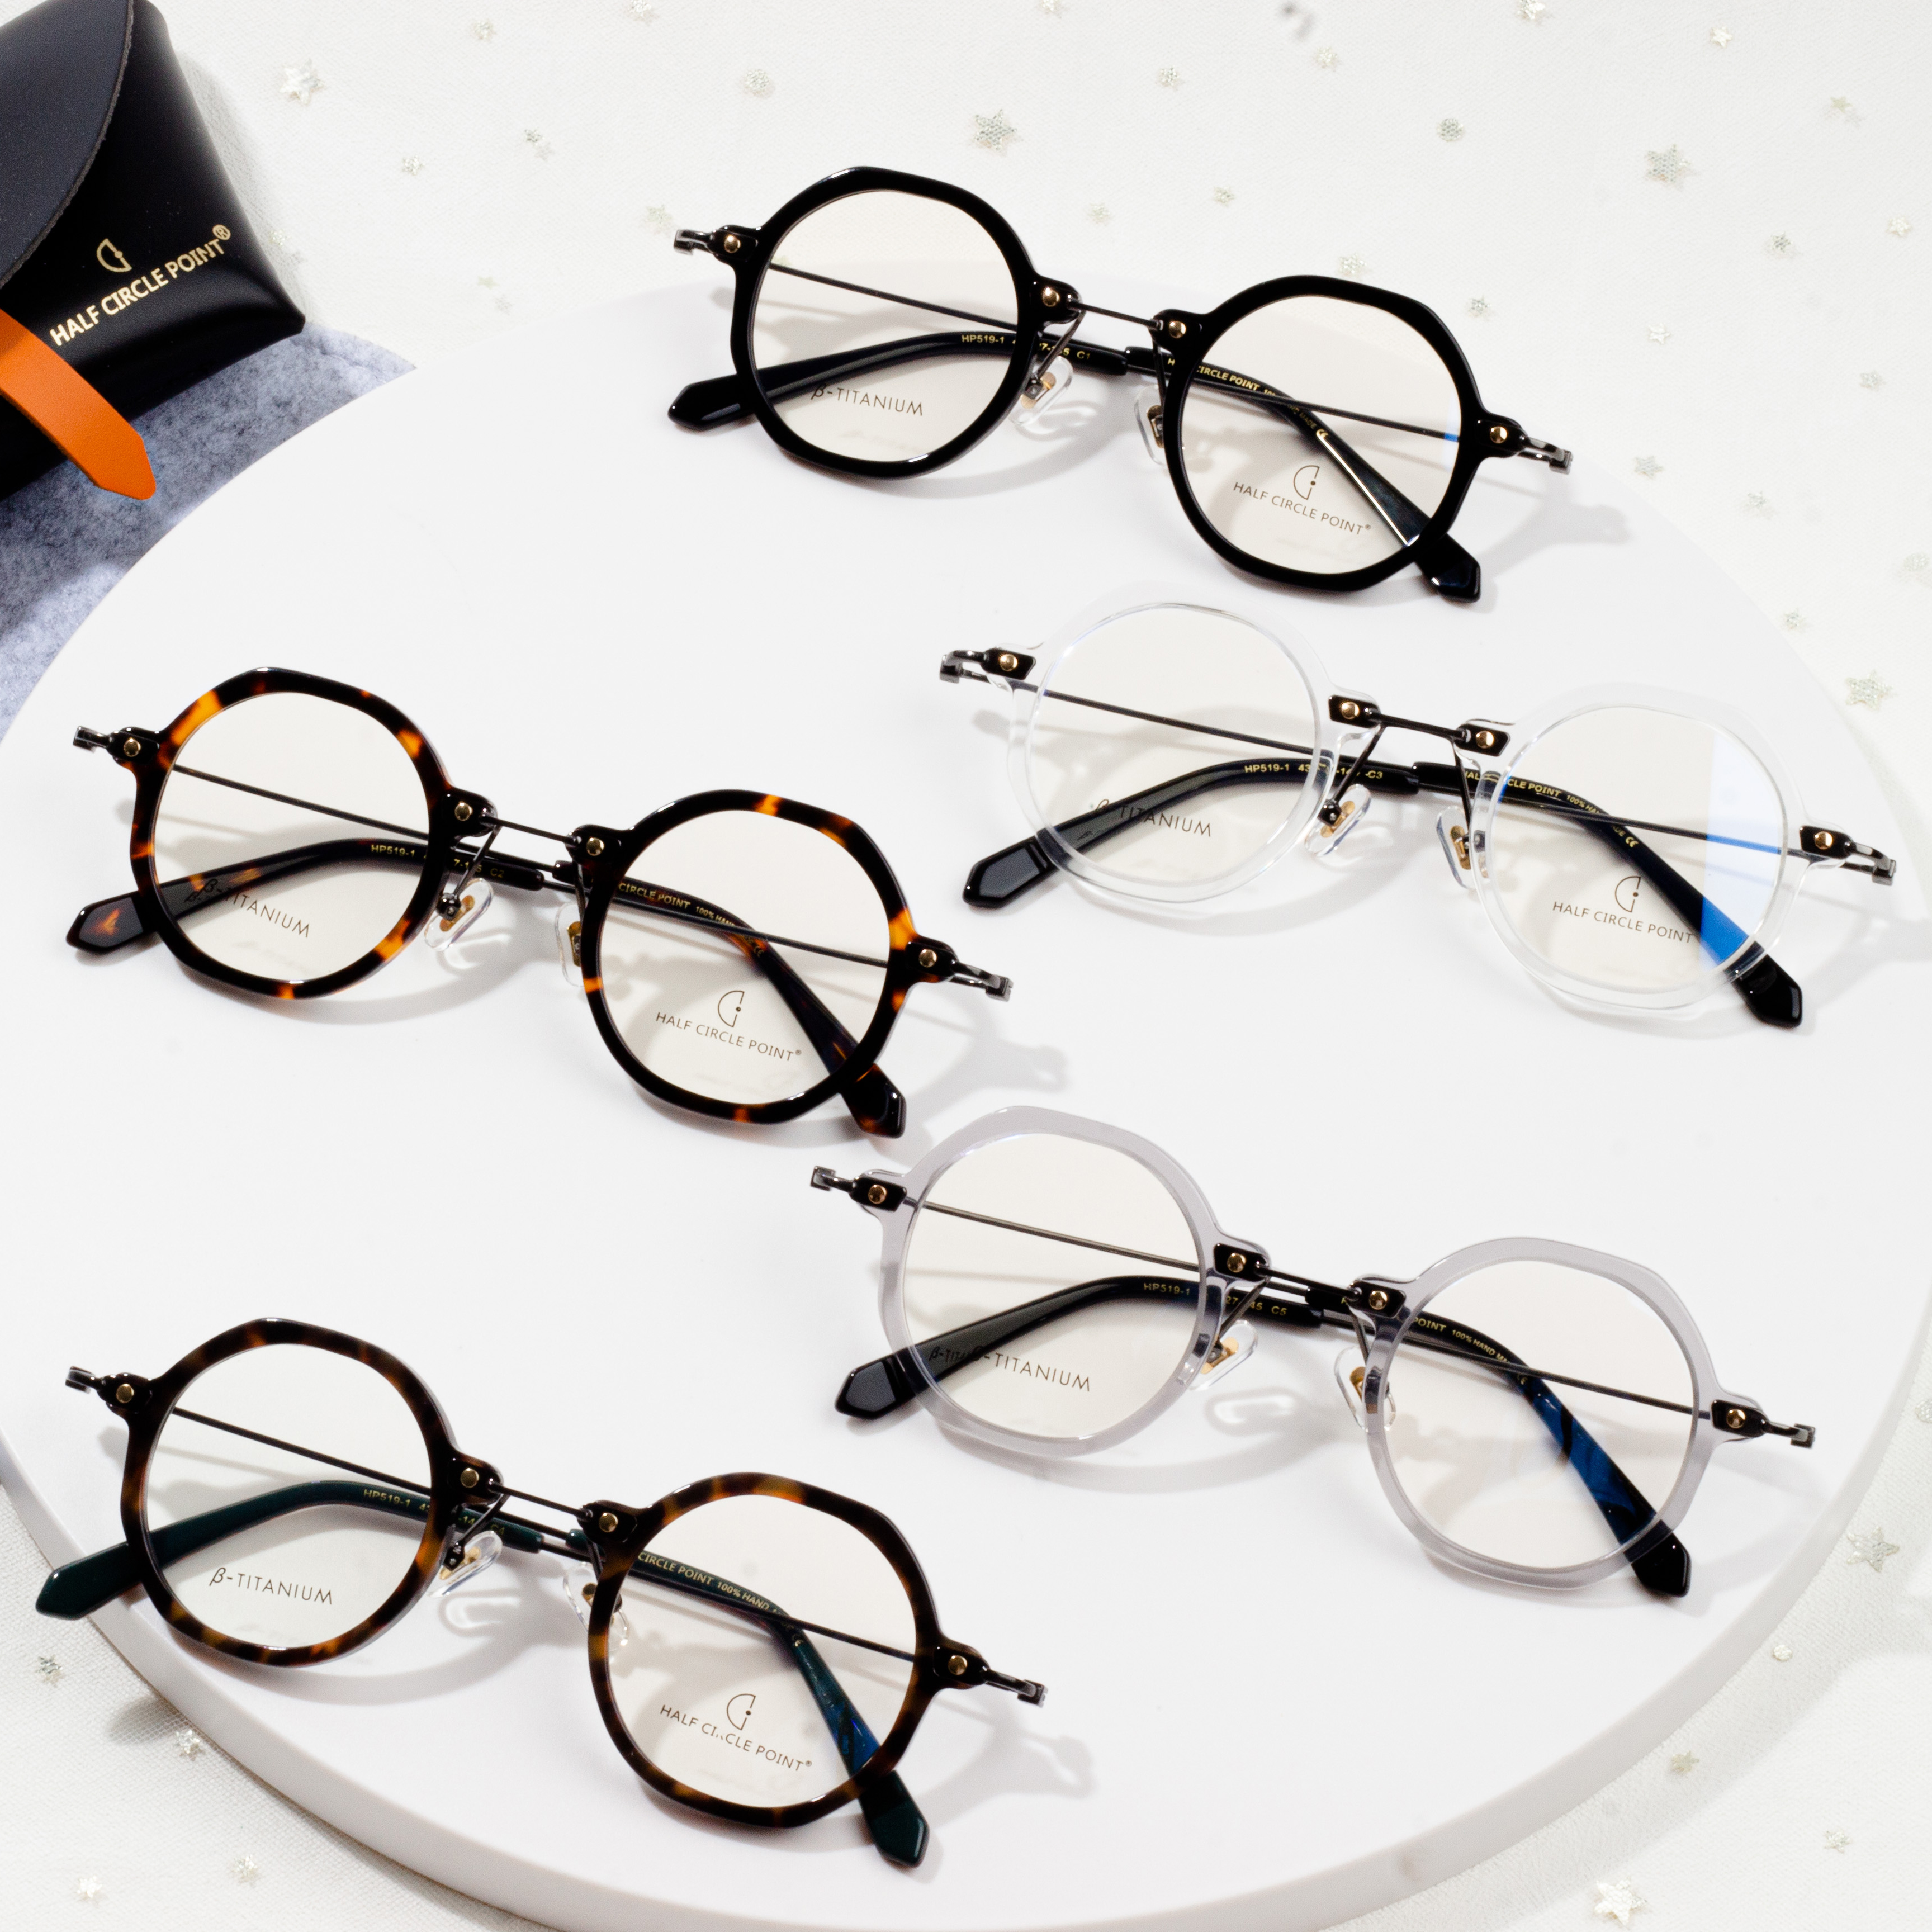 OEM ODM optična acetatna okrogla očala